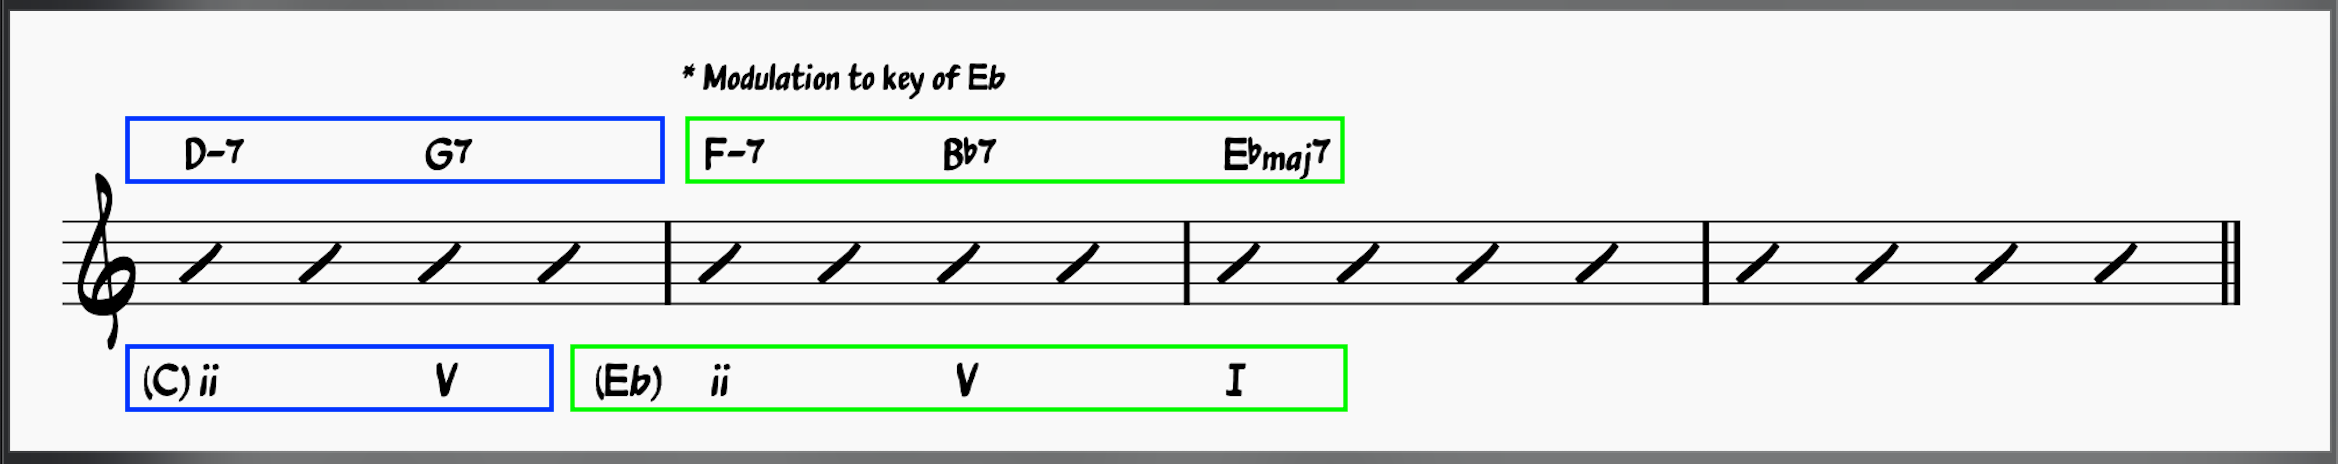 ii-V-ii-V-I chord progression showing modulation from C to Eb